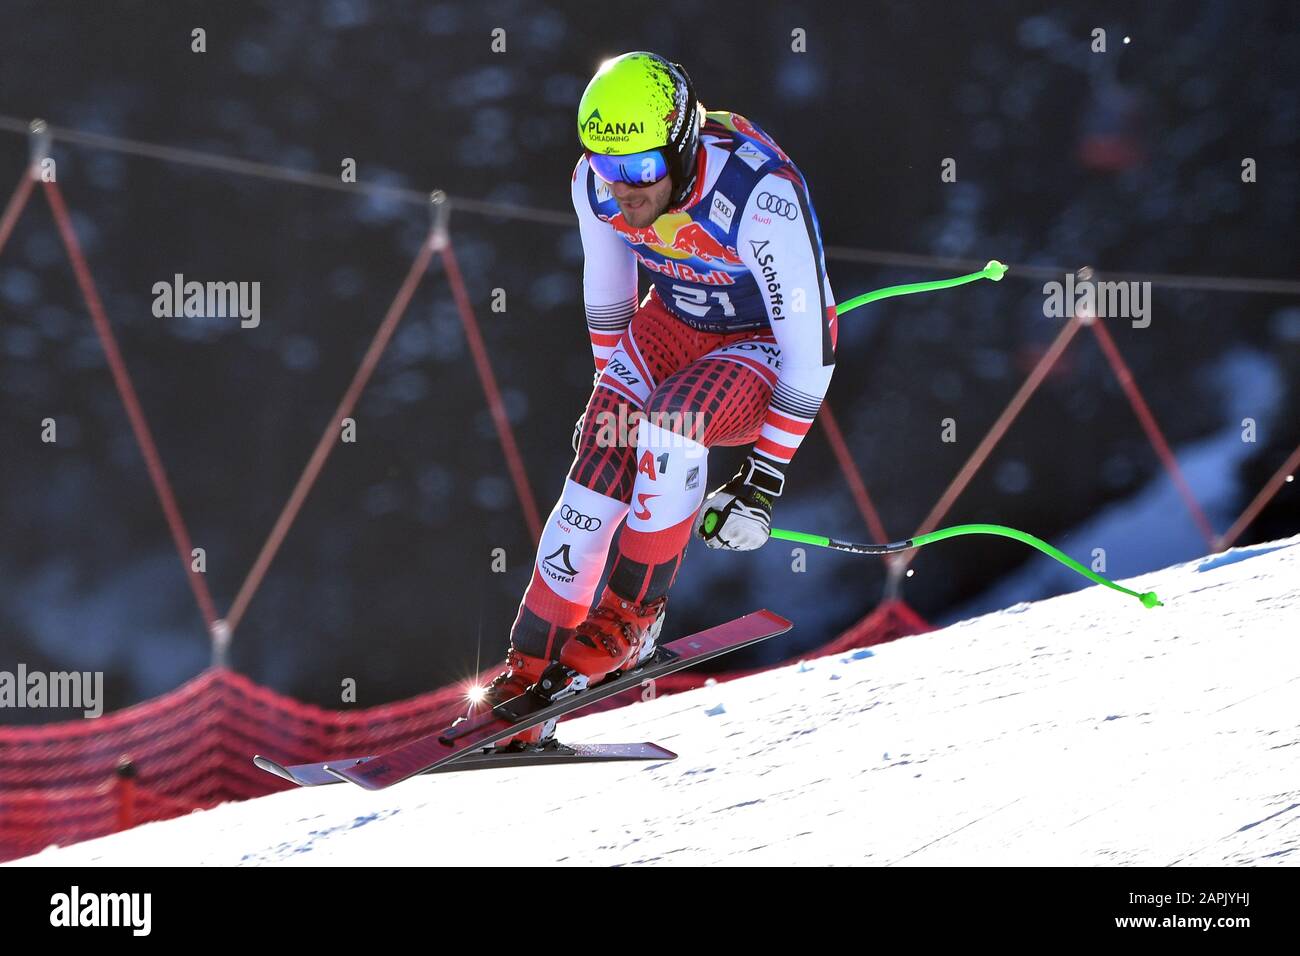 Daniel DANKLMAIER (AUT), action, alpine skiing, training, 80. Hahnenkamm race 2020, Kitzbuehel, Hahnenkamm, Streif, departure, January 23, 2020 | usage worldwide Stock Photo